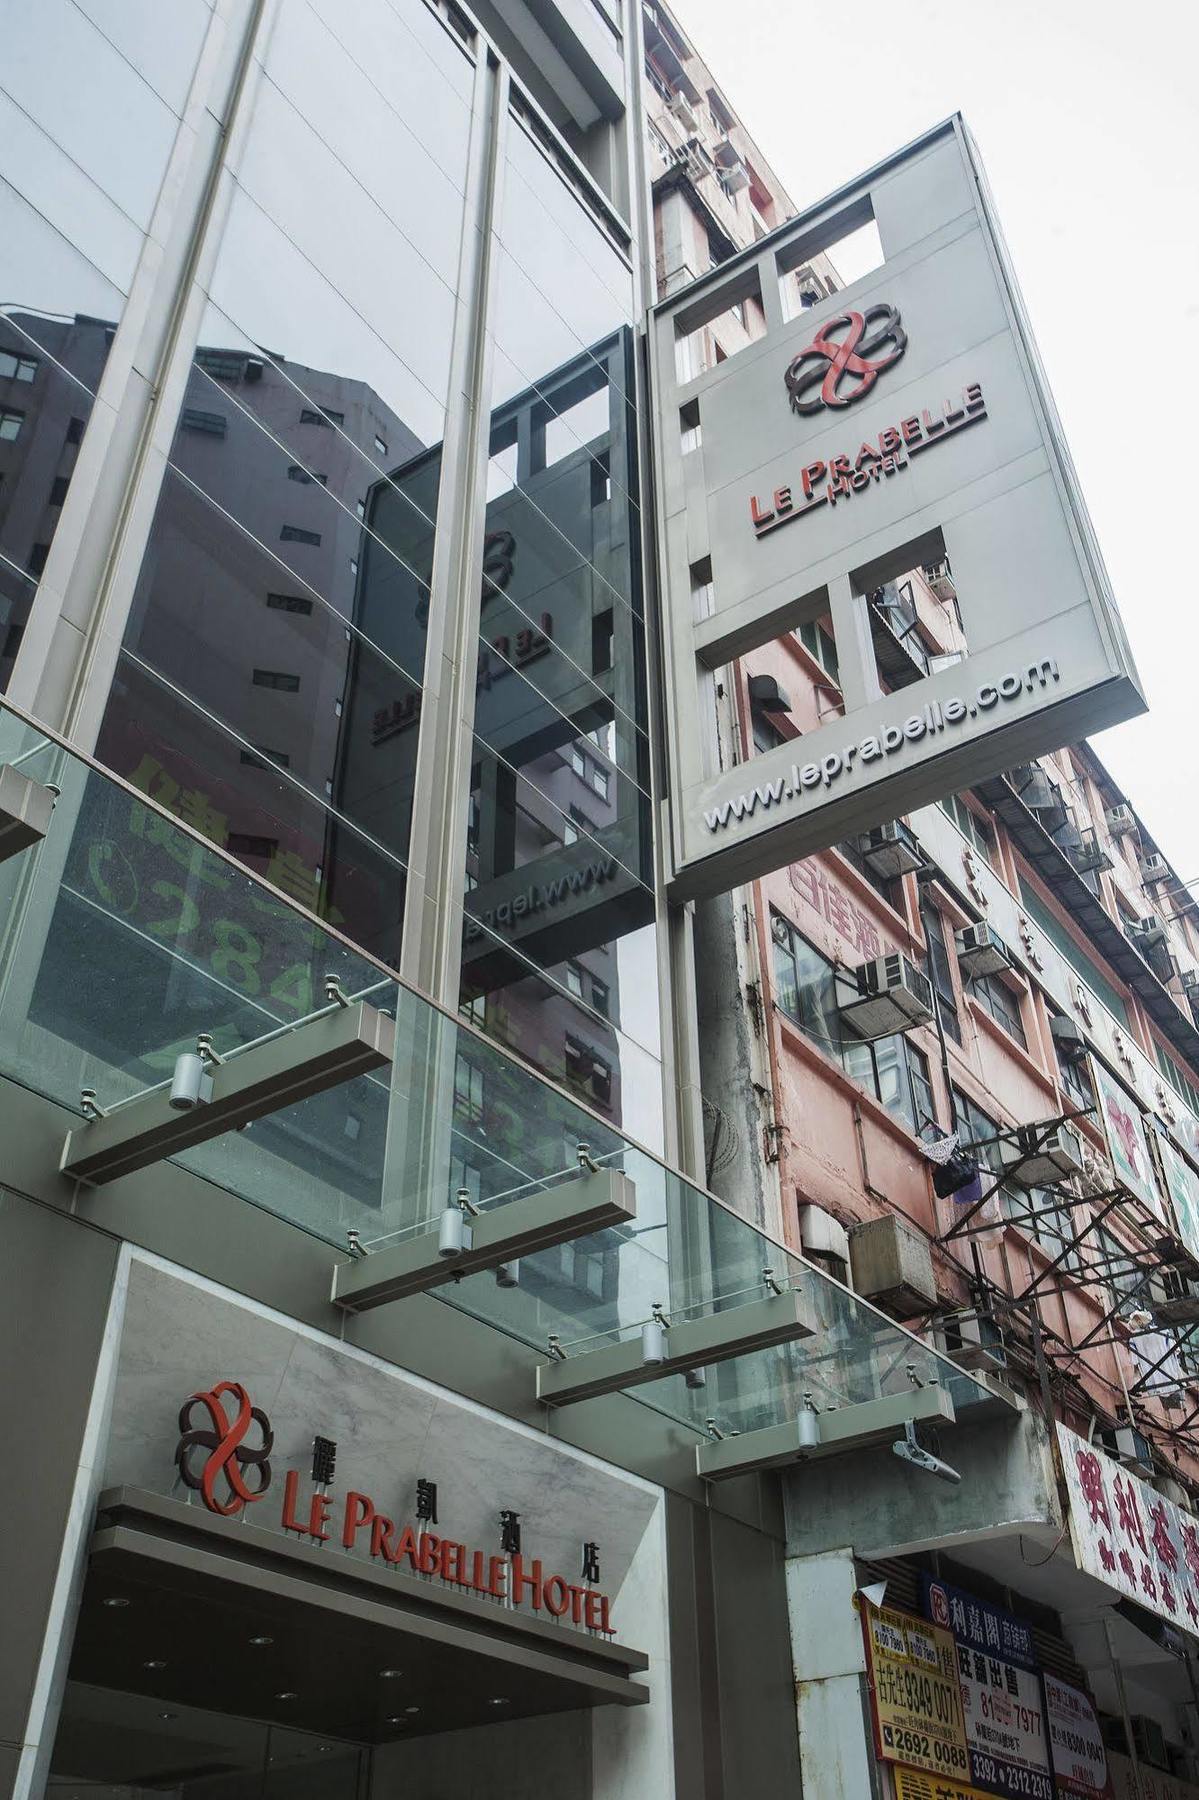 Le Prabelle Hotel Hong Kong Exterior photo